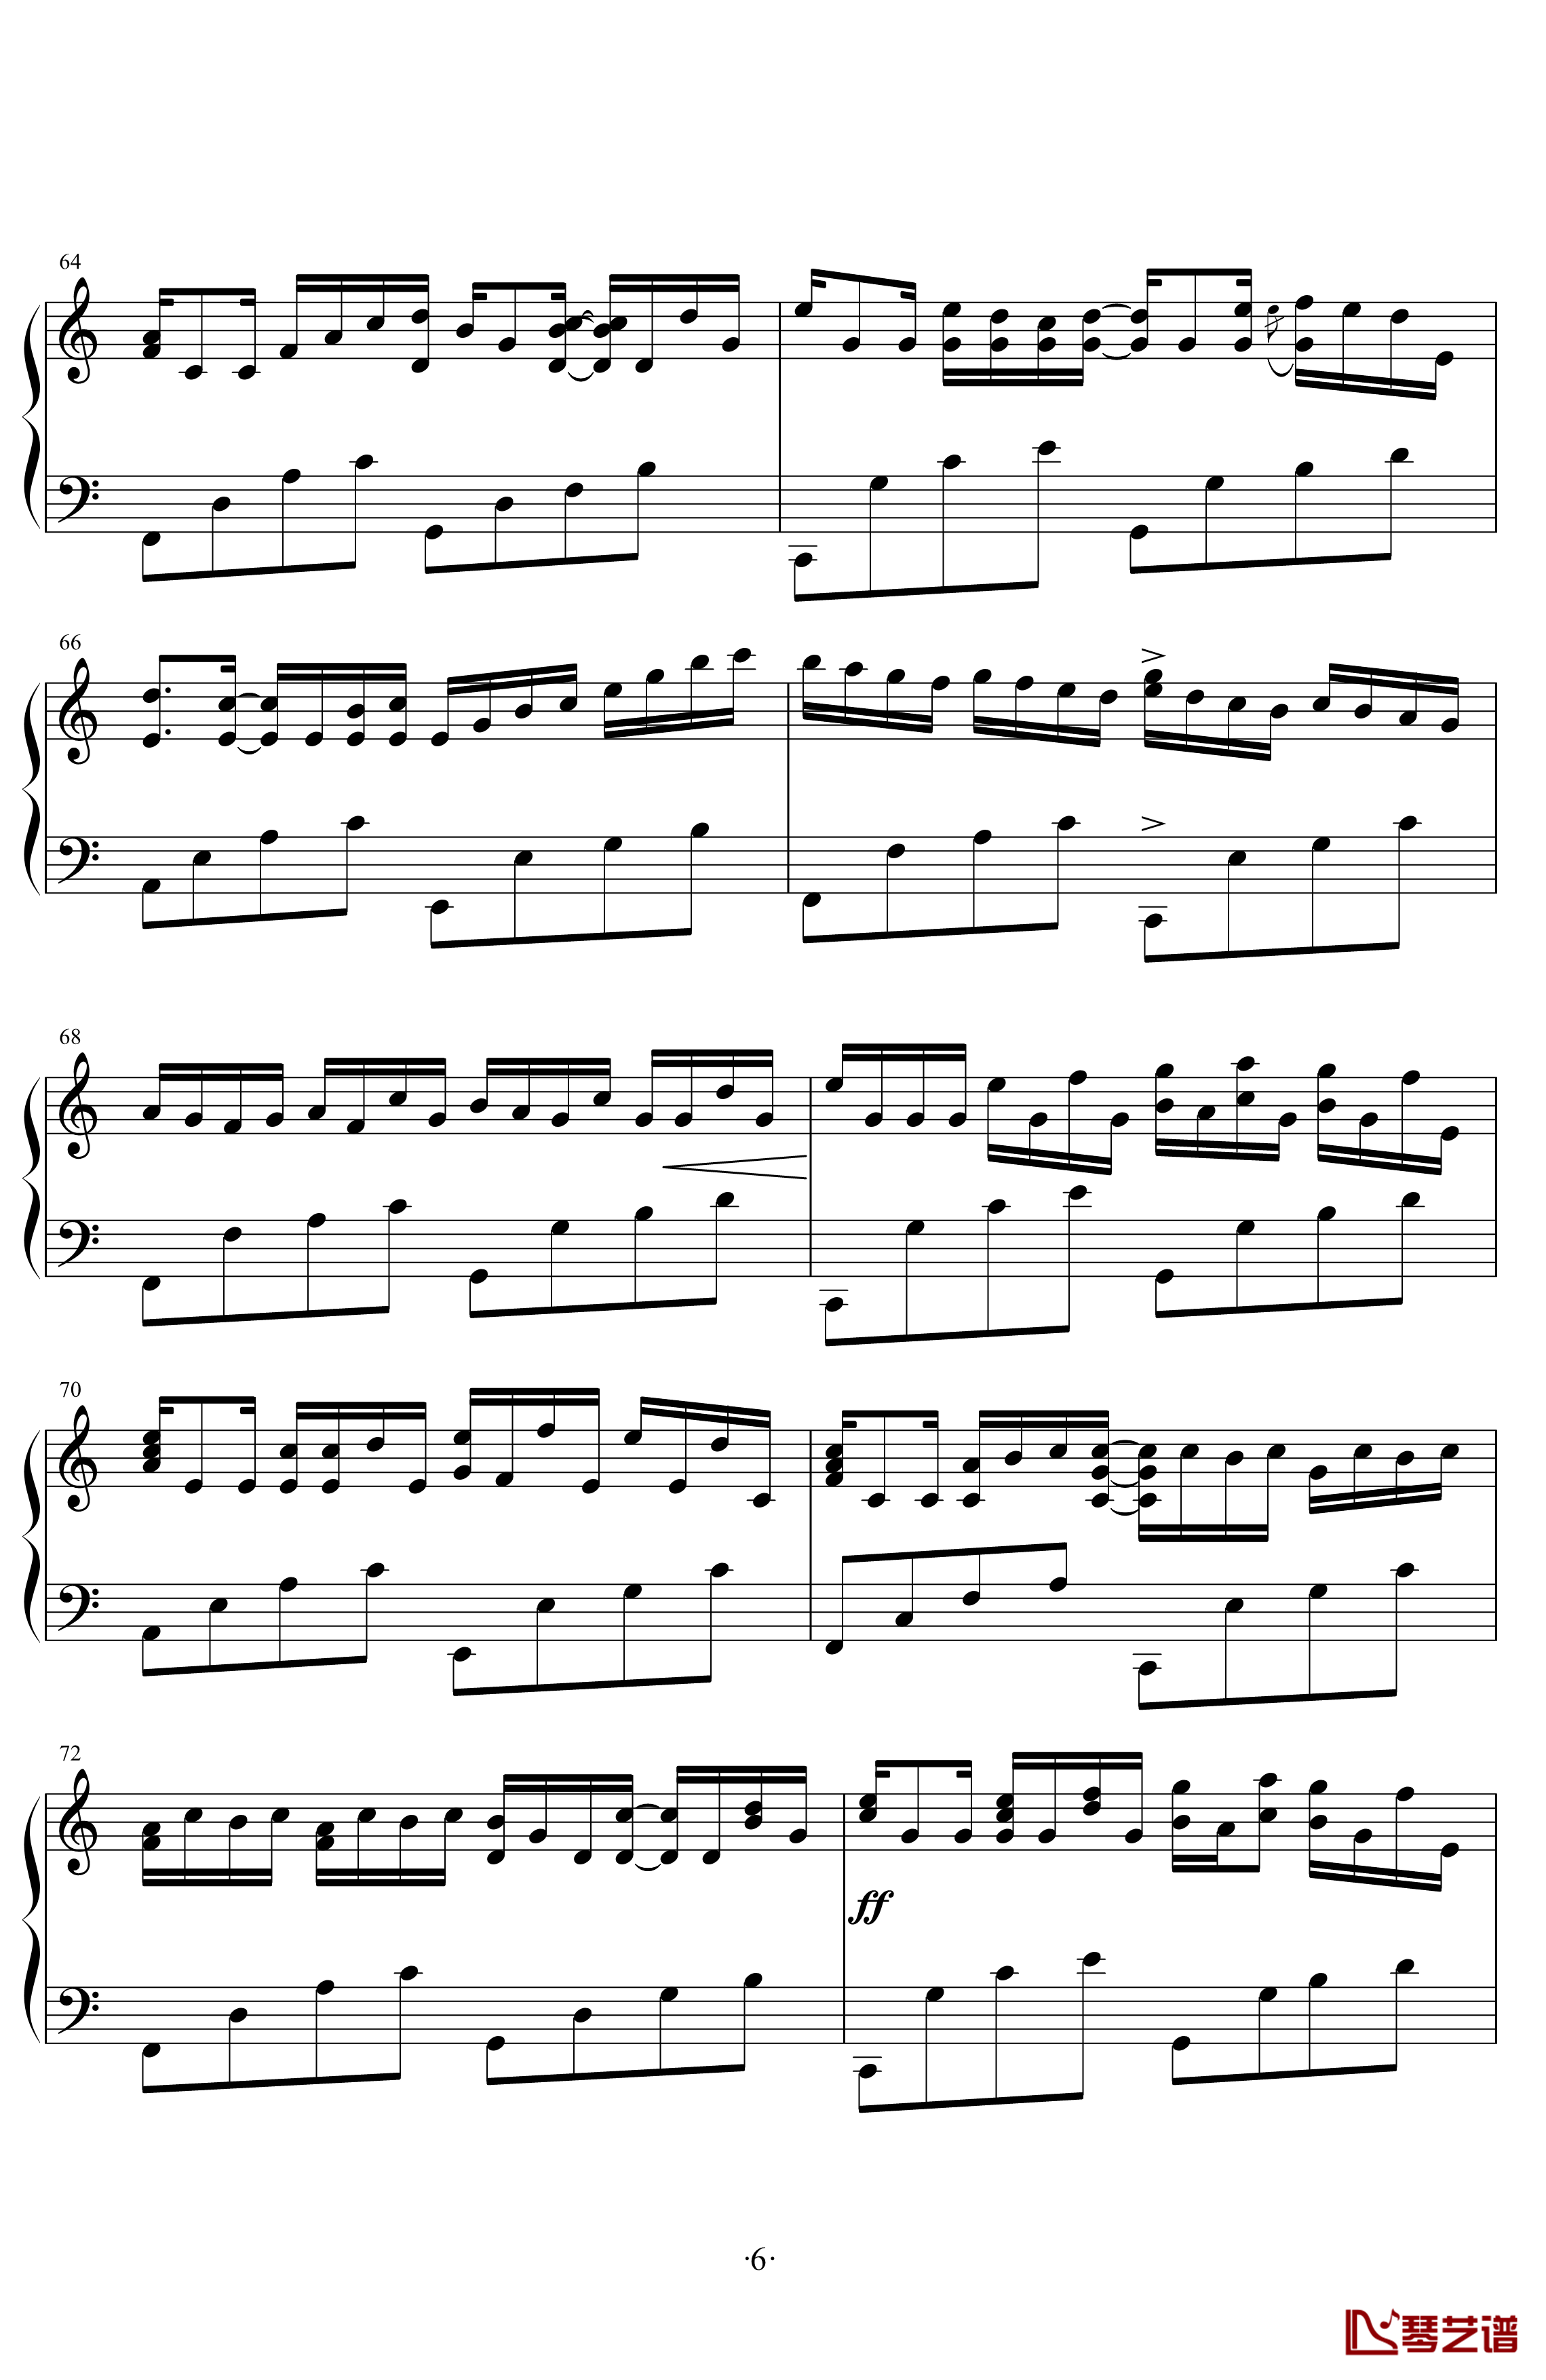 卡农变奏曲钢琴谱-Variations on the Canon by Pachelbel V.L.最终定本-George Winston6